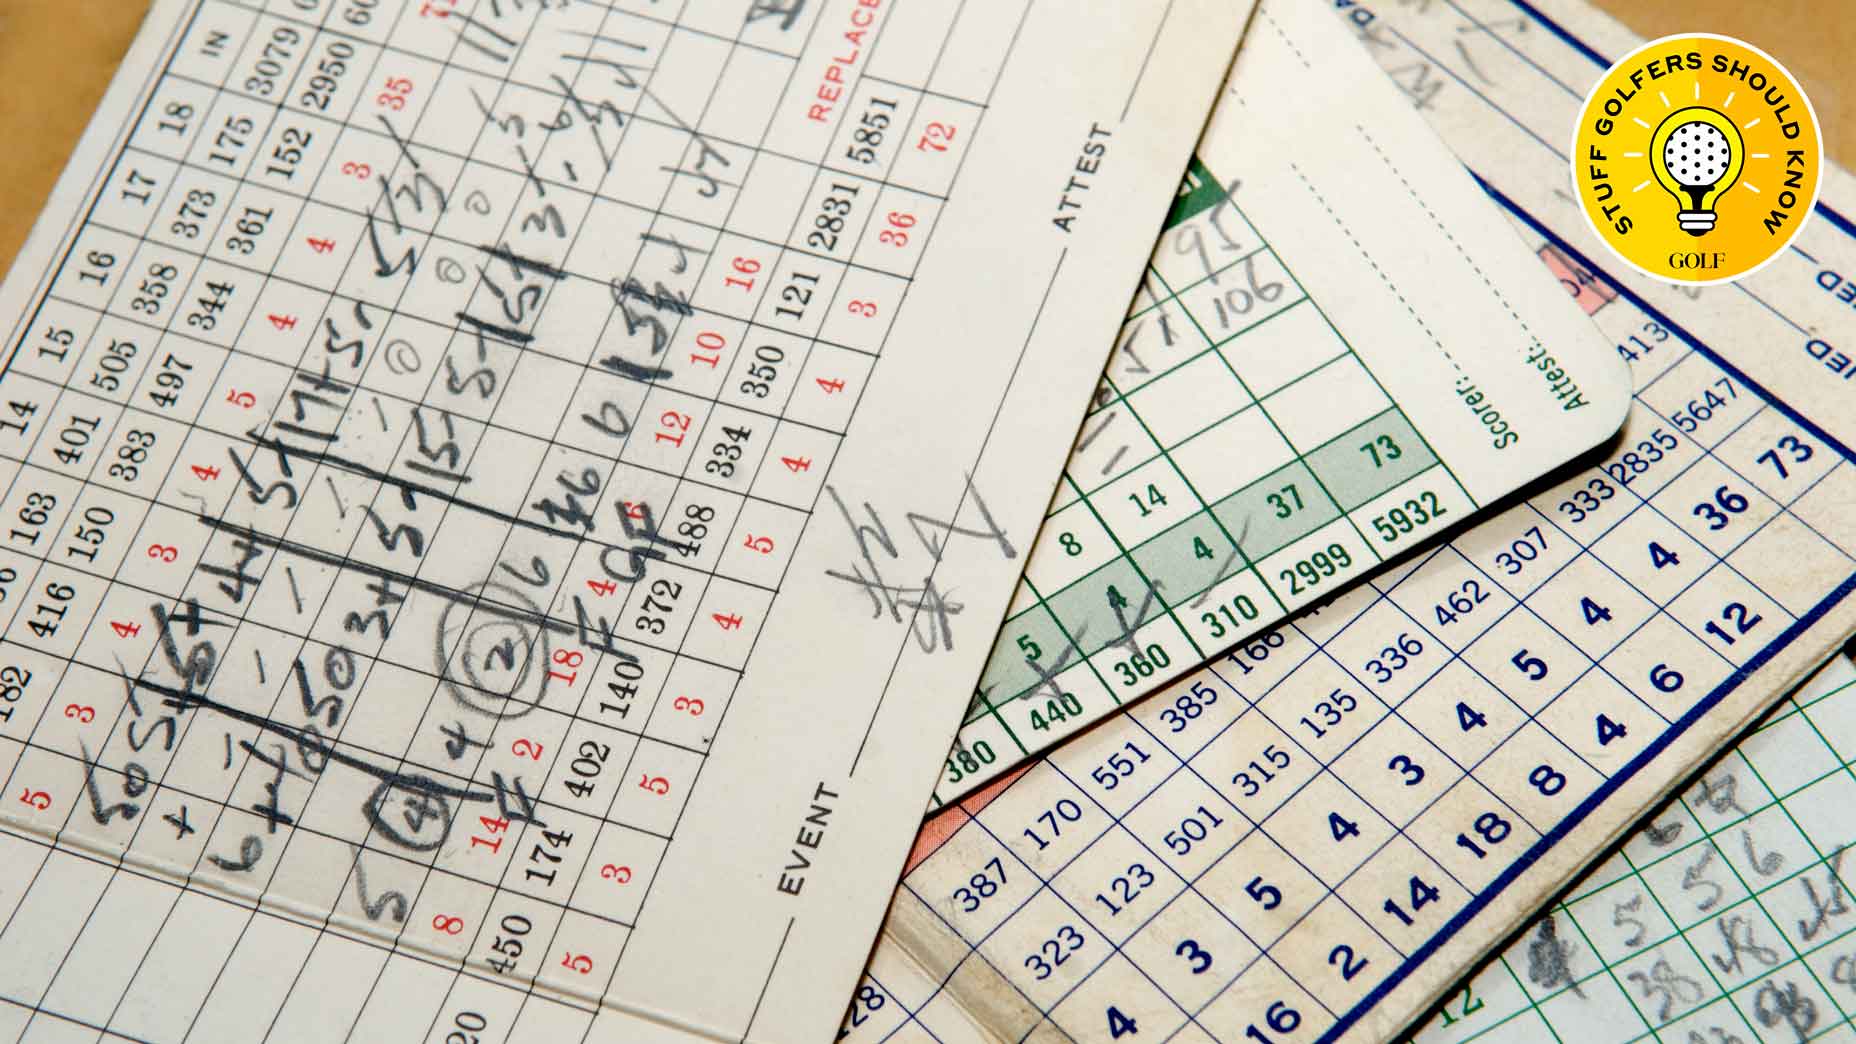 A stack of golf scorecards